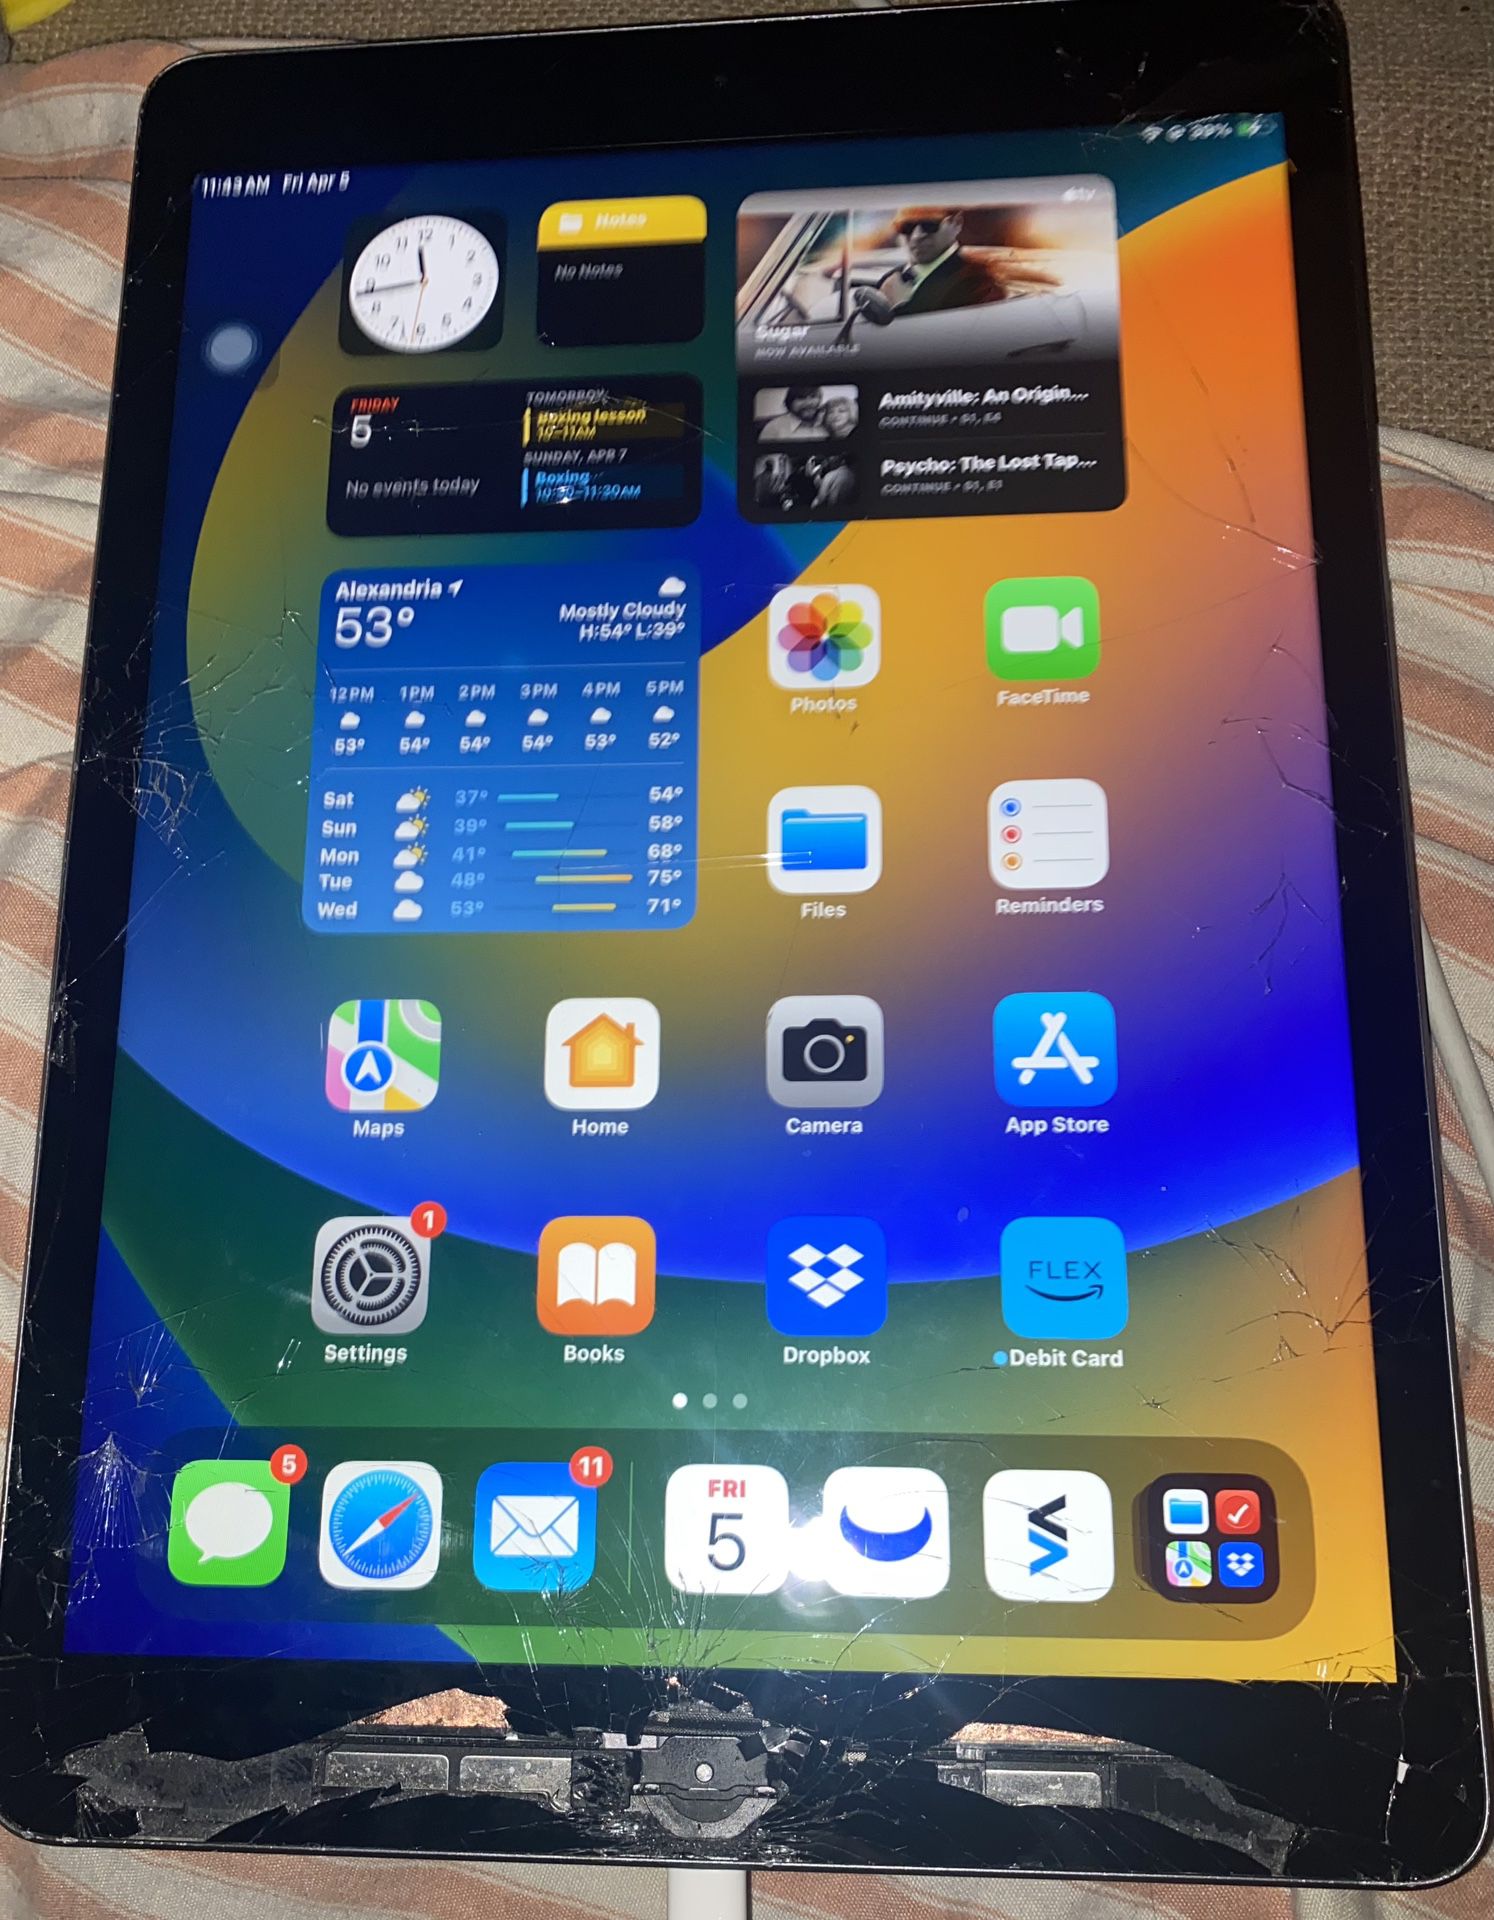 iPad Ninth Generation needs screen